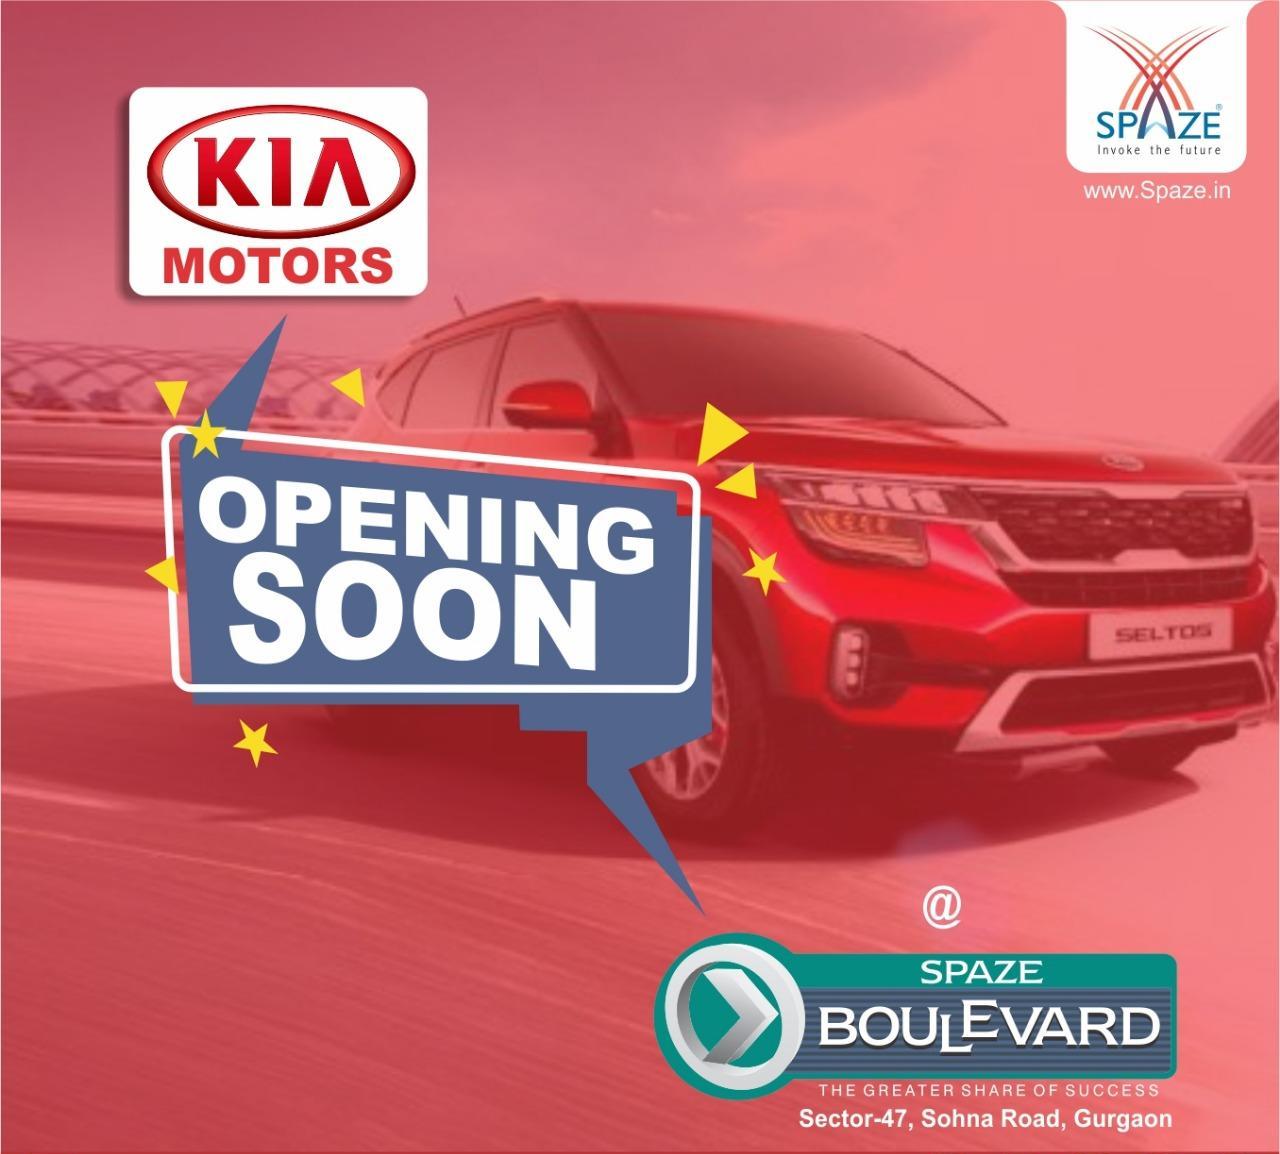 Kia Motors opening soon at Spaze Boulevard, Gurgaon Update